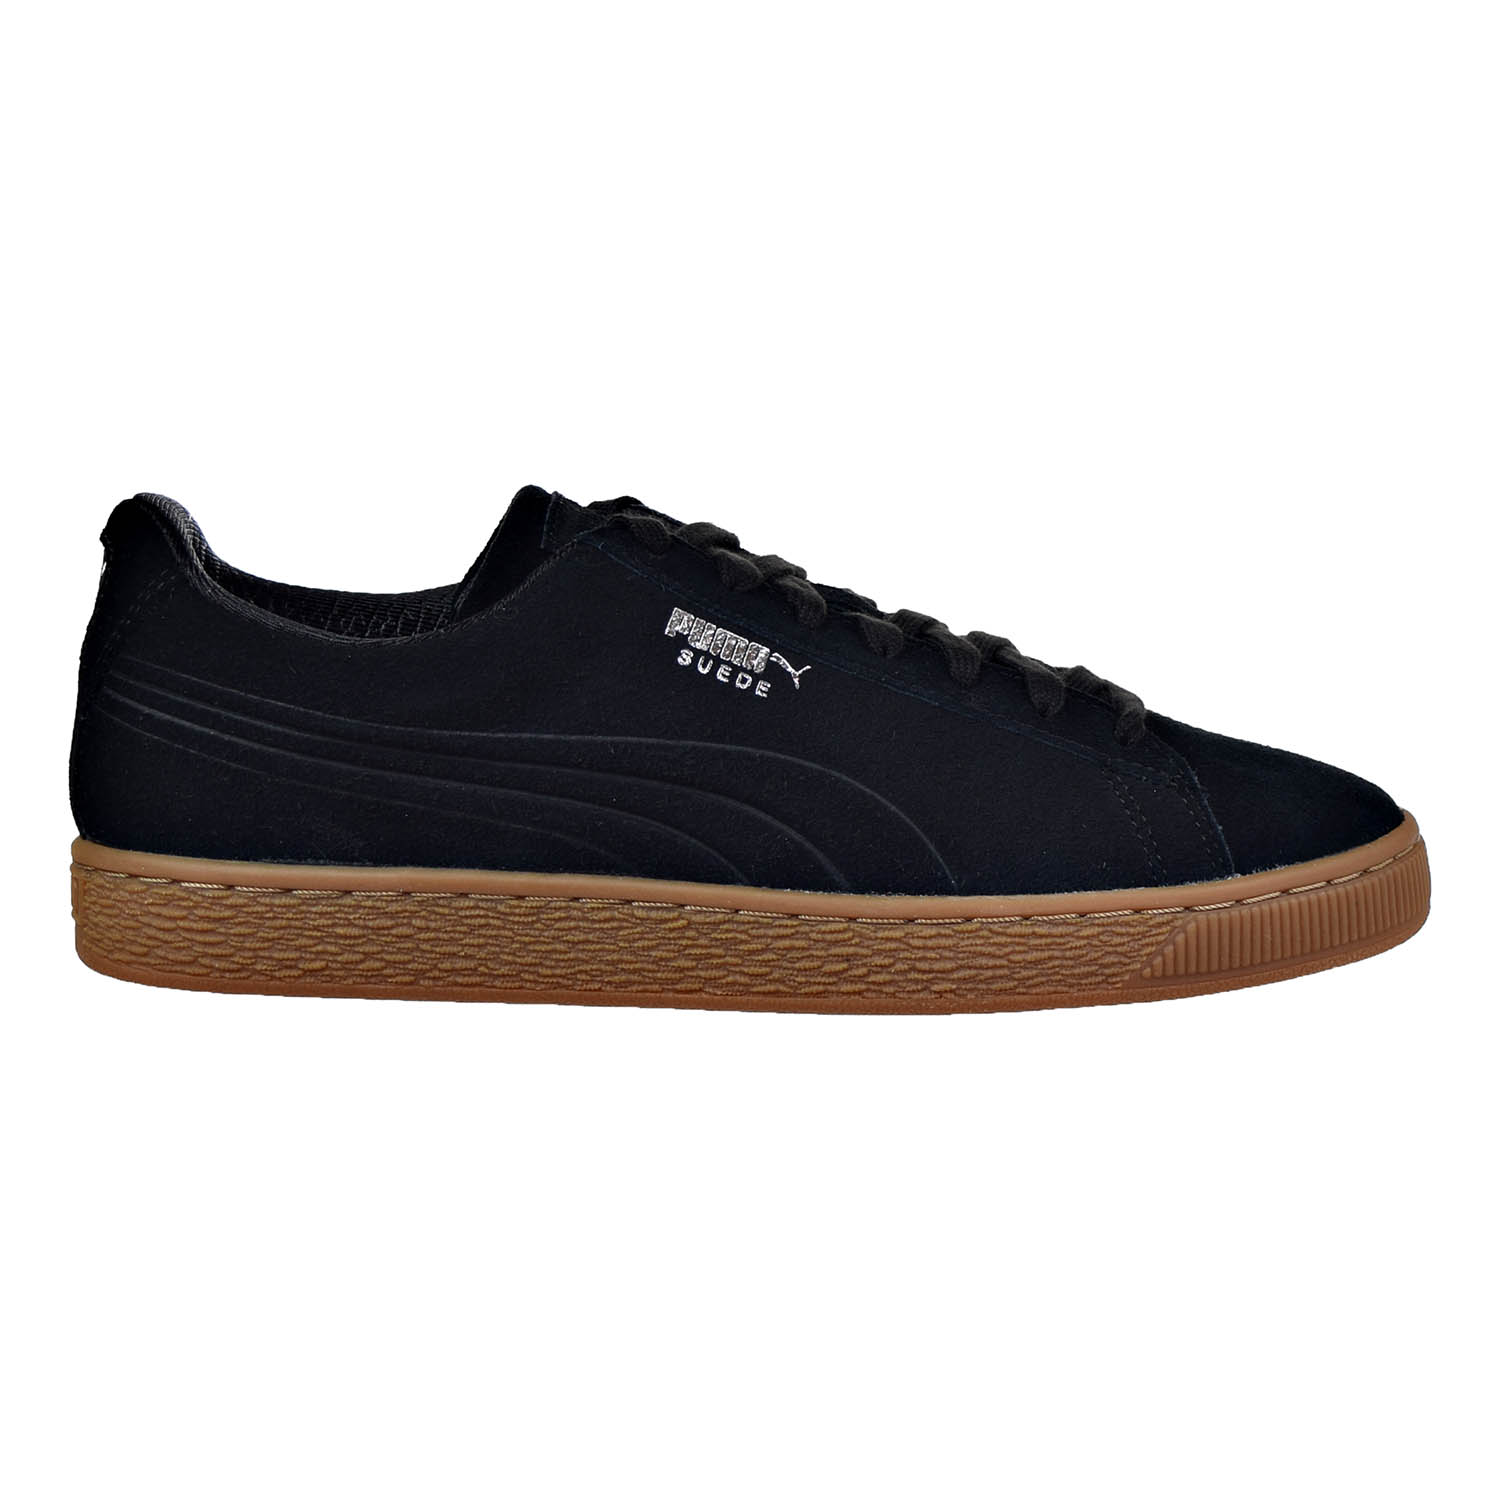 Puma Suede Classic Debossed Q4 Men's Shoes Puma Black/Glacier Grey 361098-02 - image 1 of 6